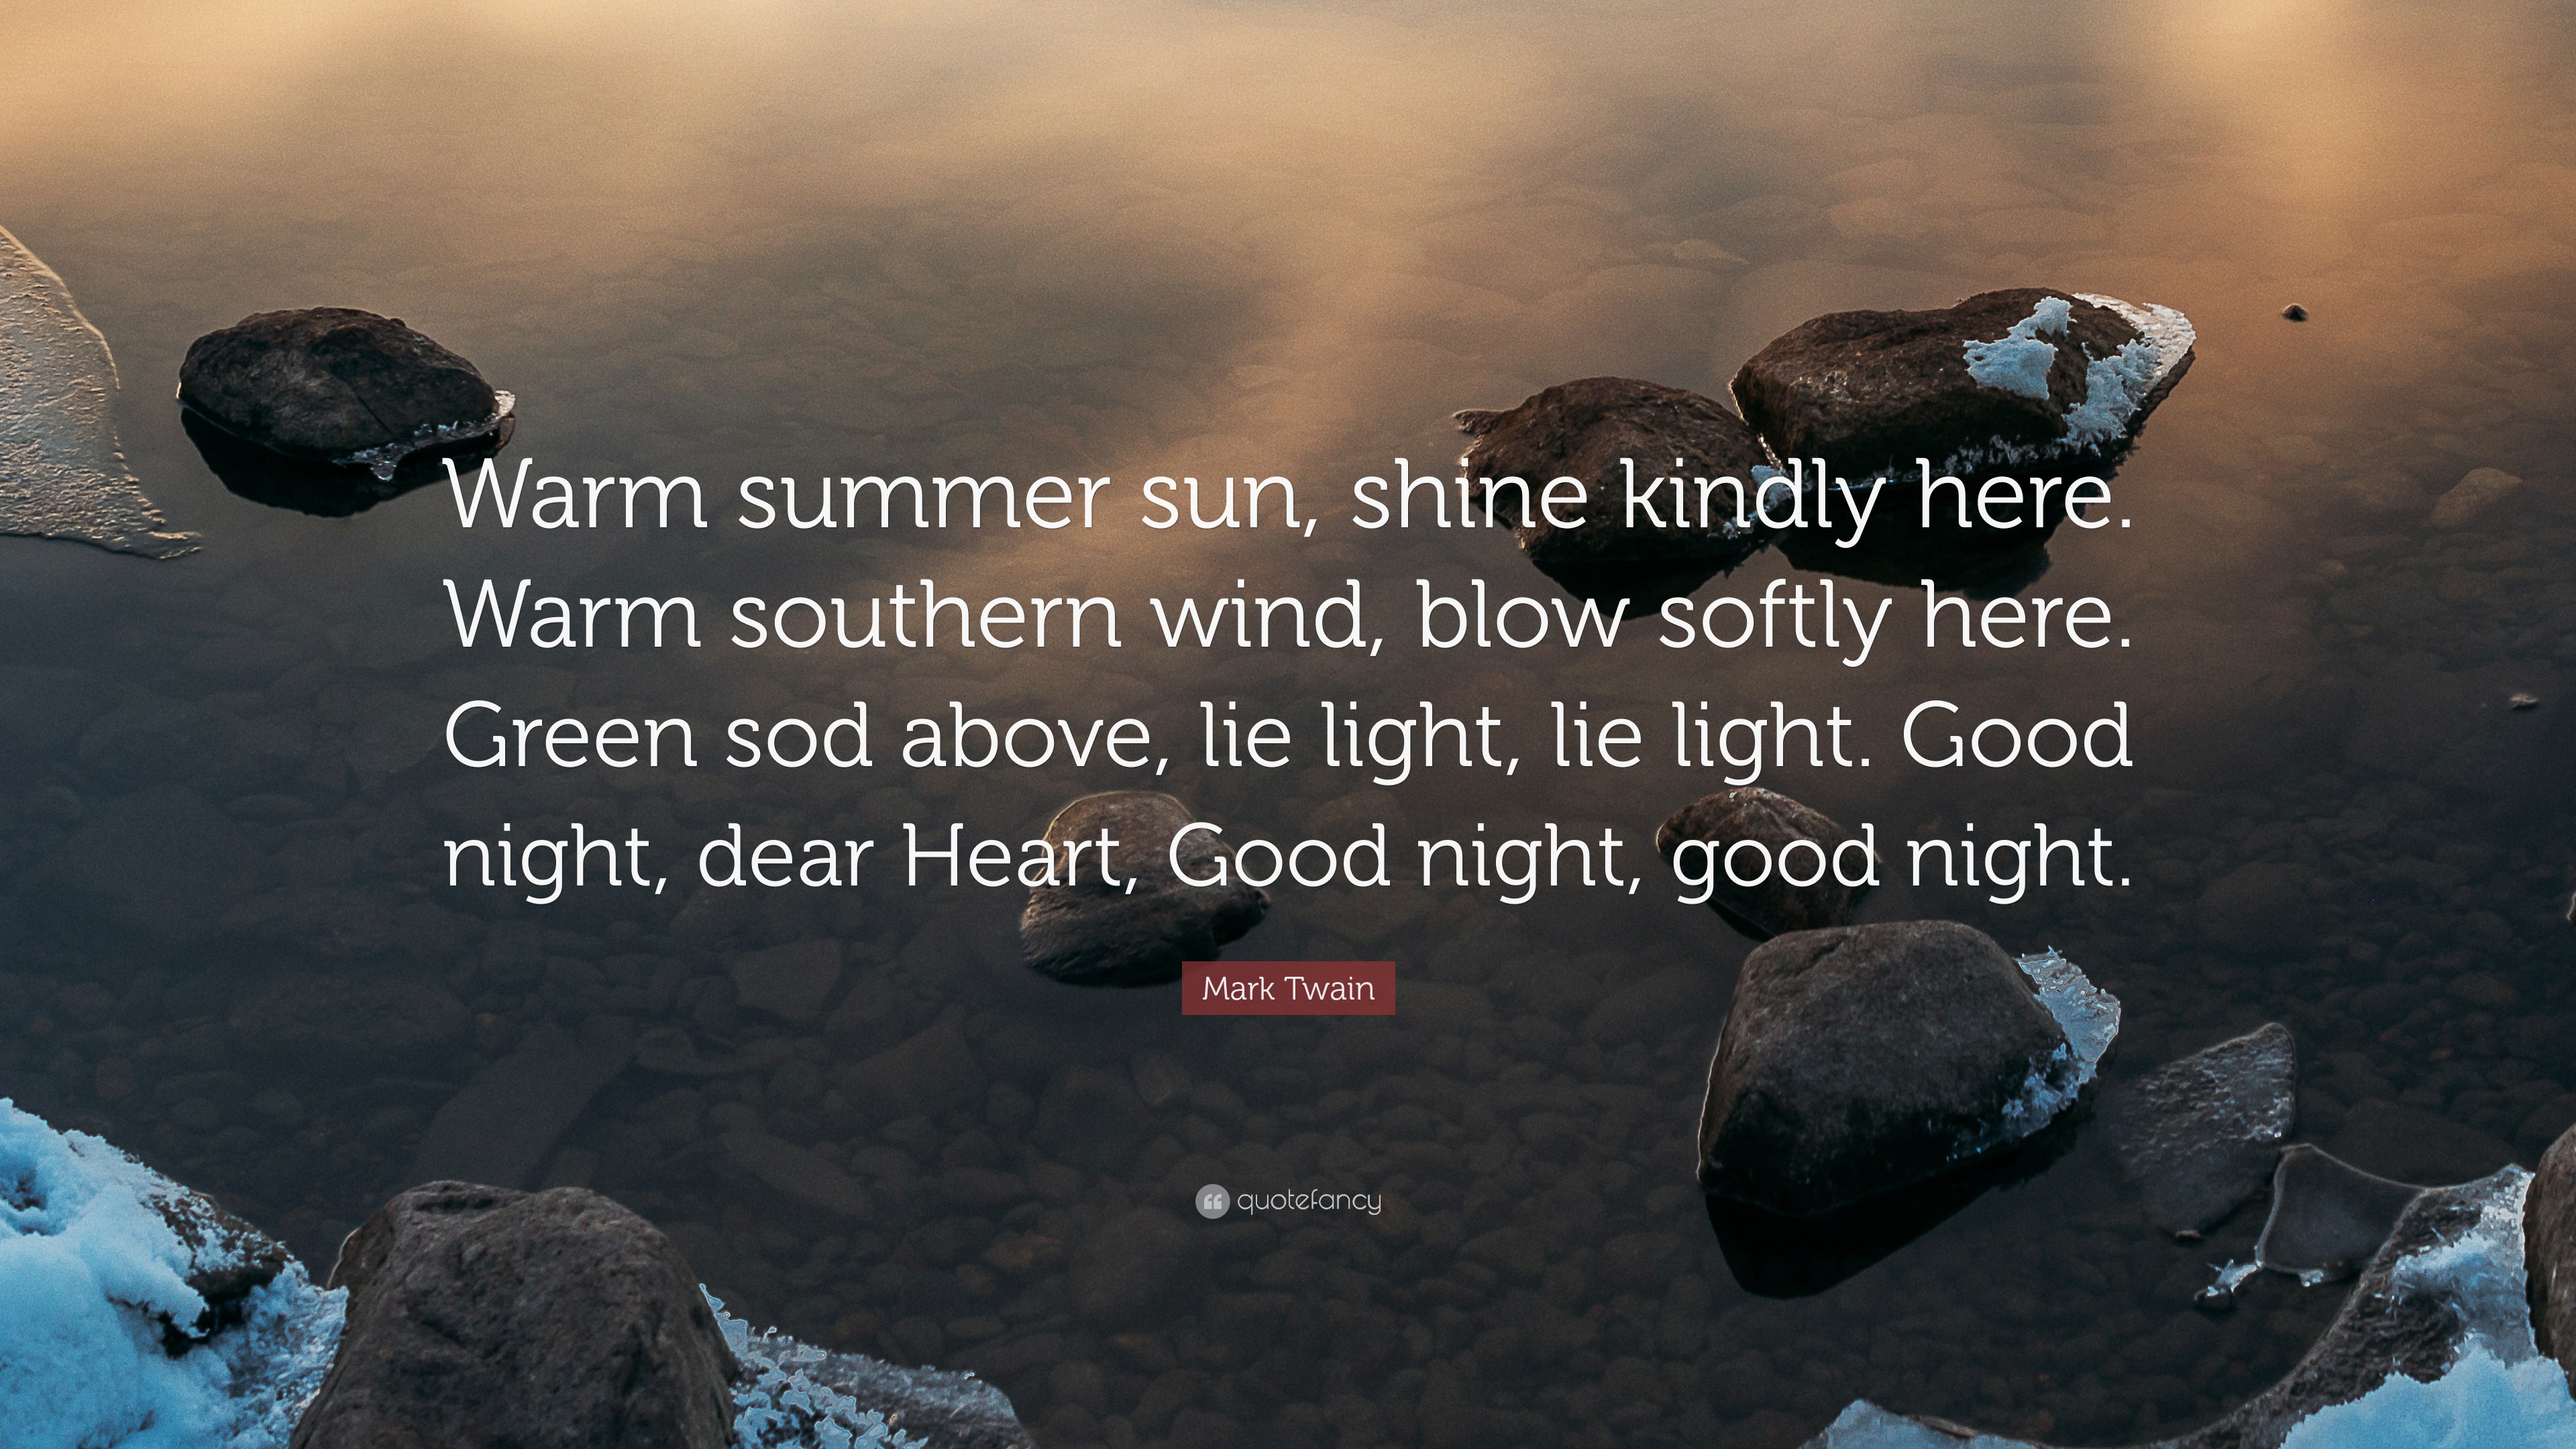 Mark Twain Quote: “Warm summer sun, shine kindly here. Warm southern